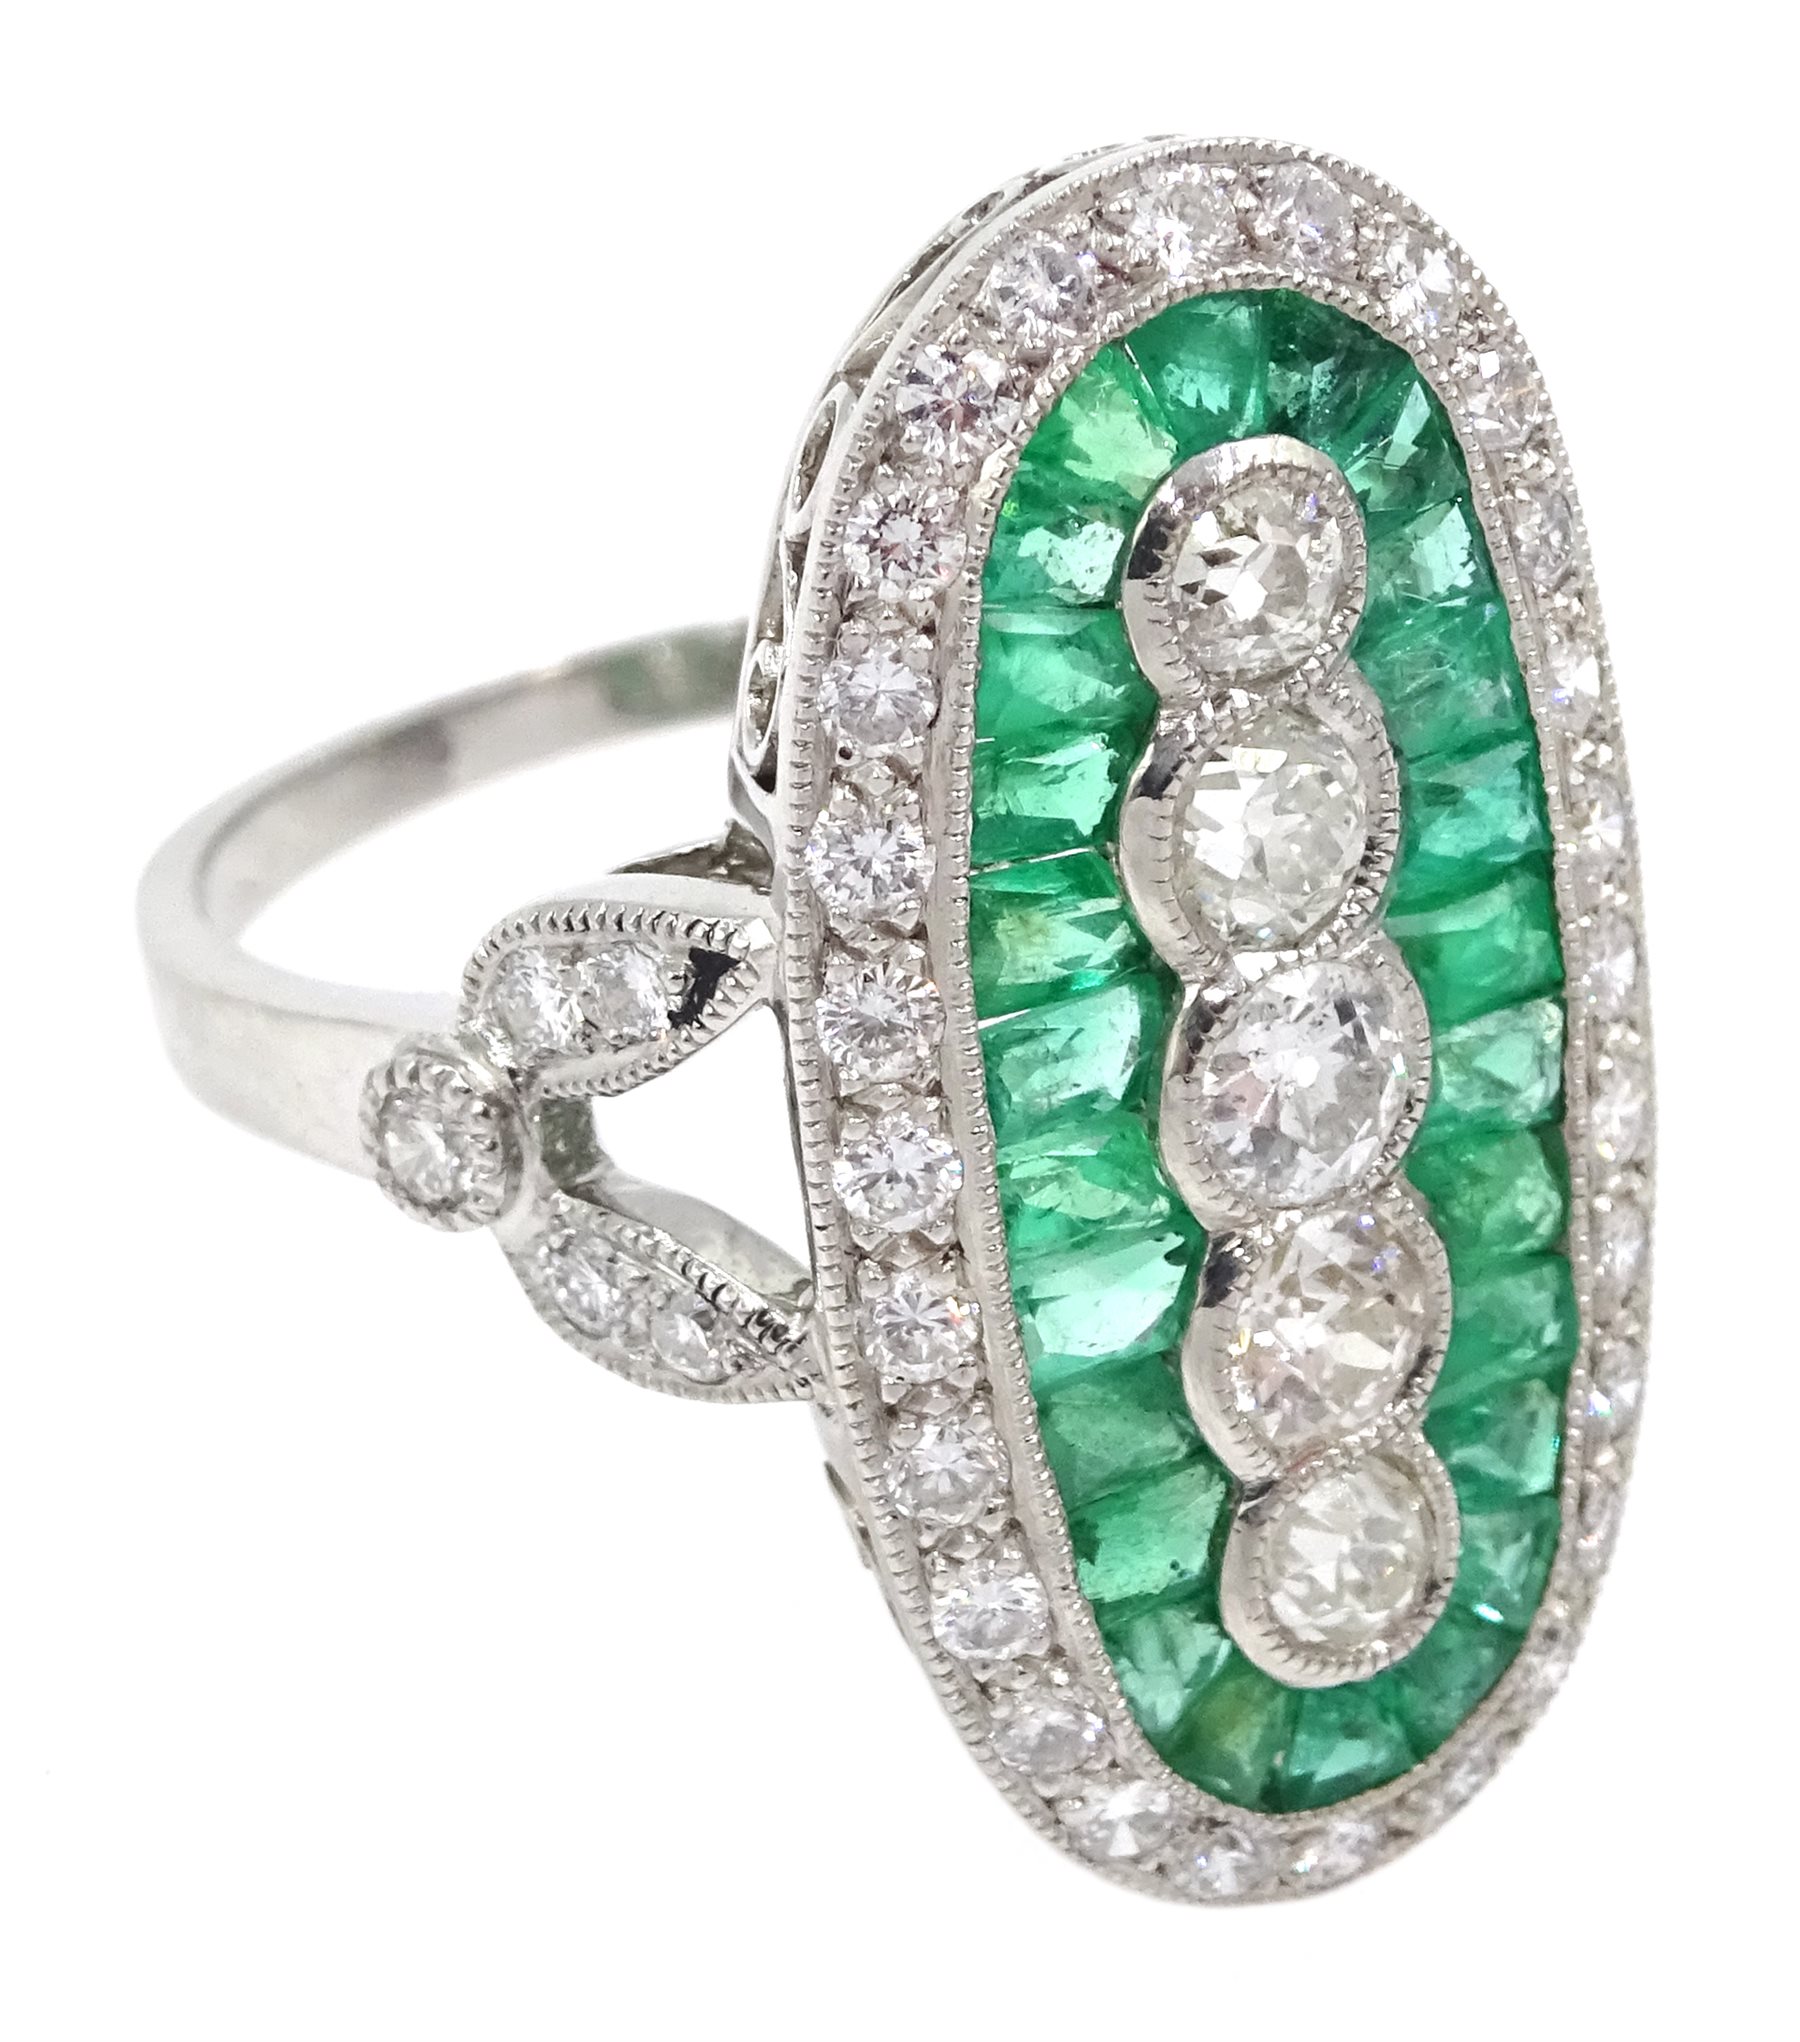 Platinum calibre cut emerald and round brilliant cut diamond oval panel ring - Image 3 of 6